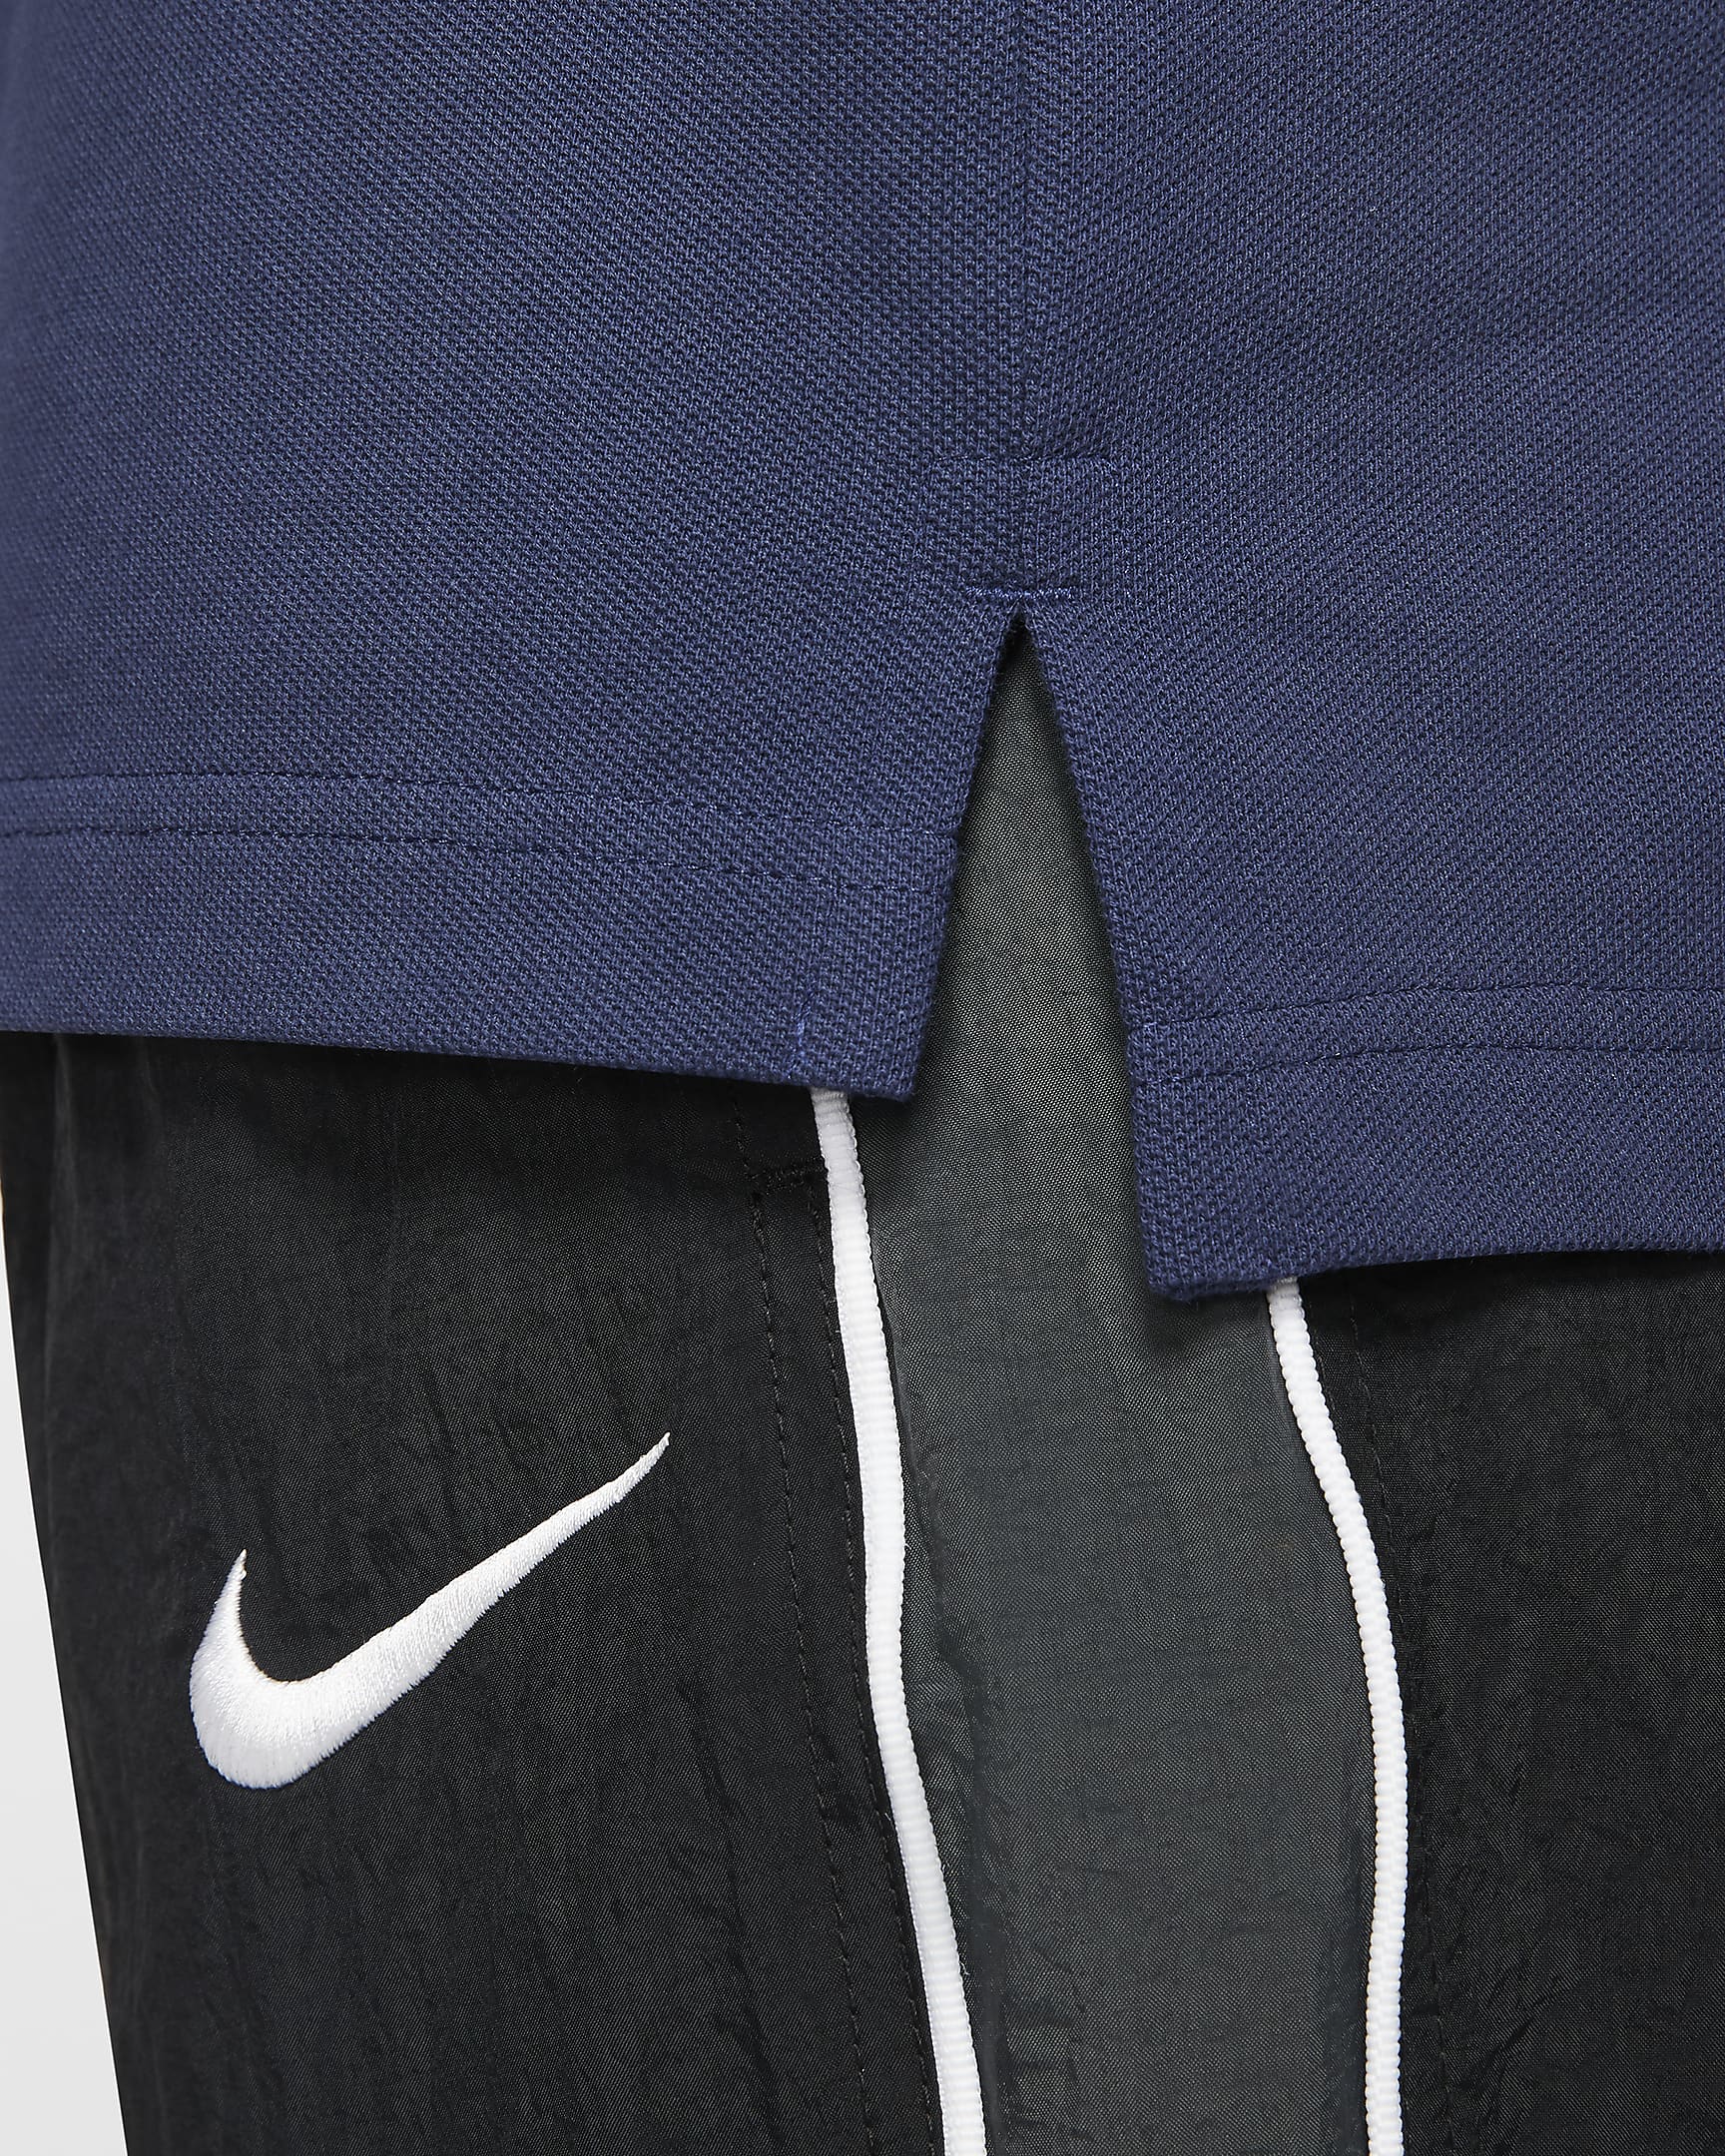 Camisa Nike Polo Sportswear